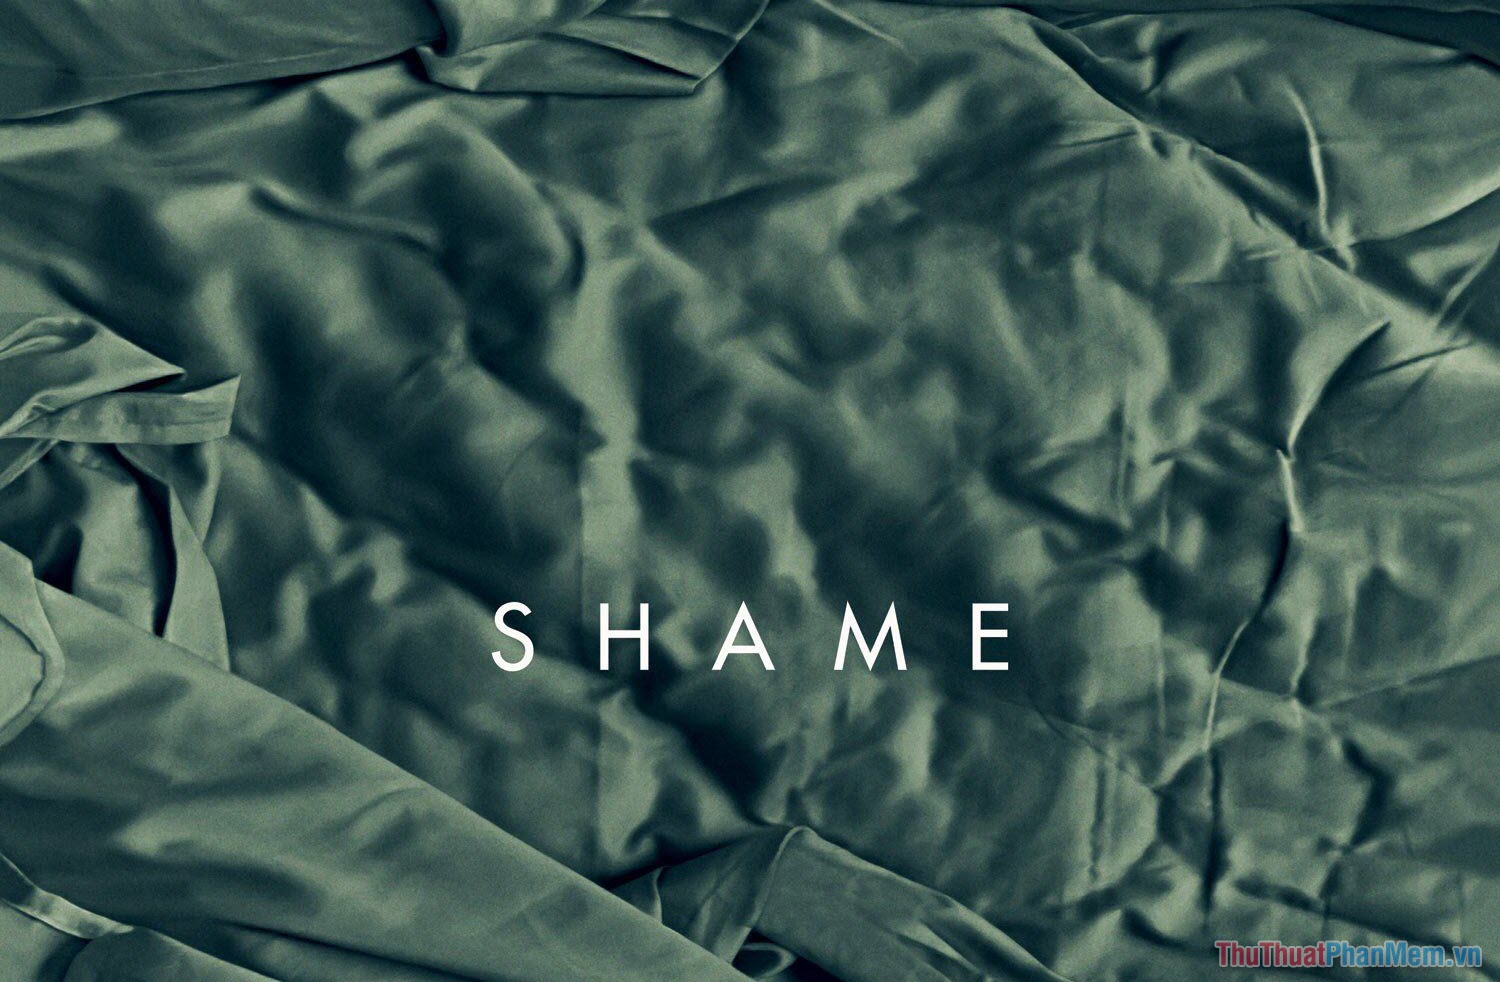 Shame – Hổ thẹn